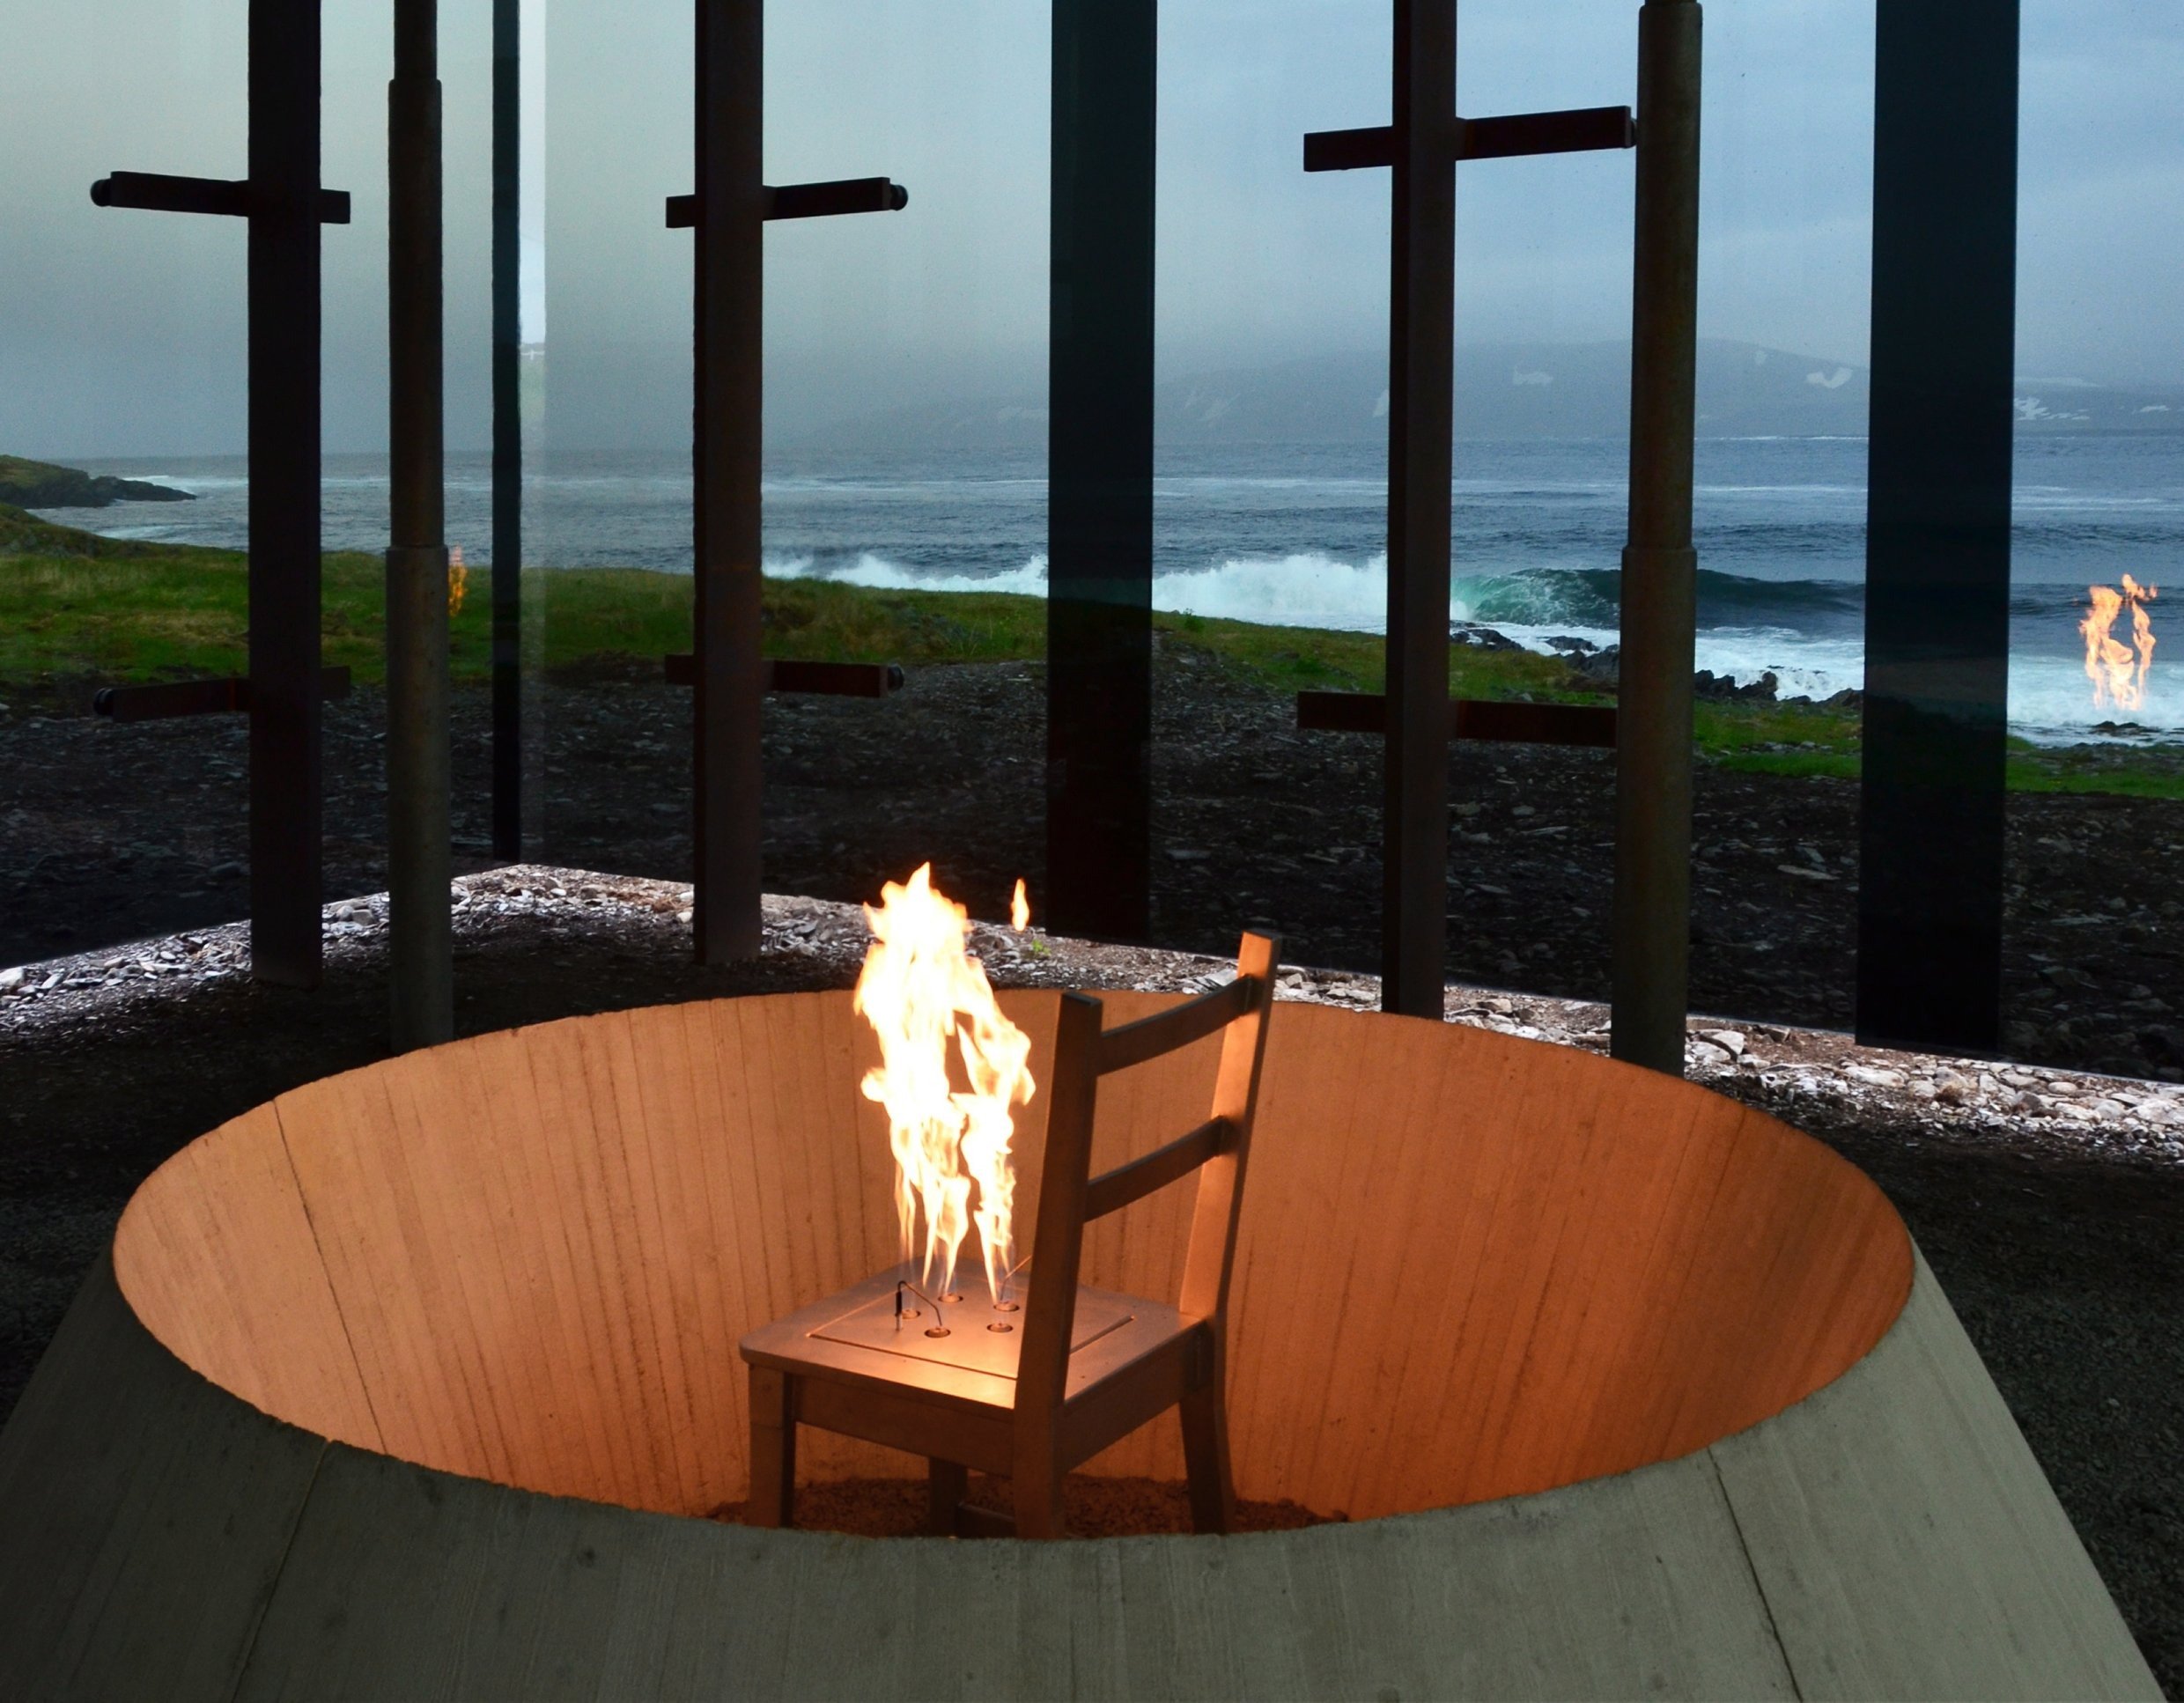 Louise Bourgeois的最後一件大作《被詛咒者，被附身者和被愛者（The Damned, The Possessed and The Beloved）》位於一個中空的混凝土錐體內，中央是一把燃燒著無盡火焰的鋼椅